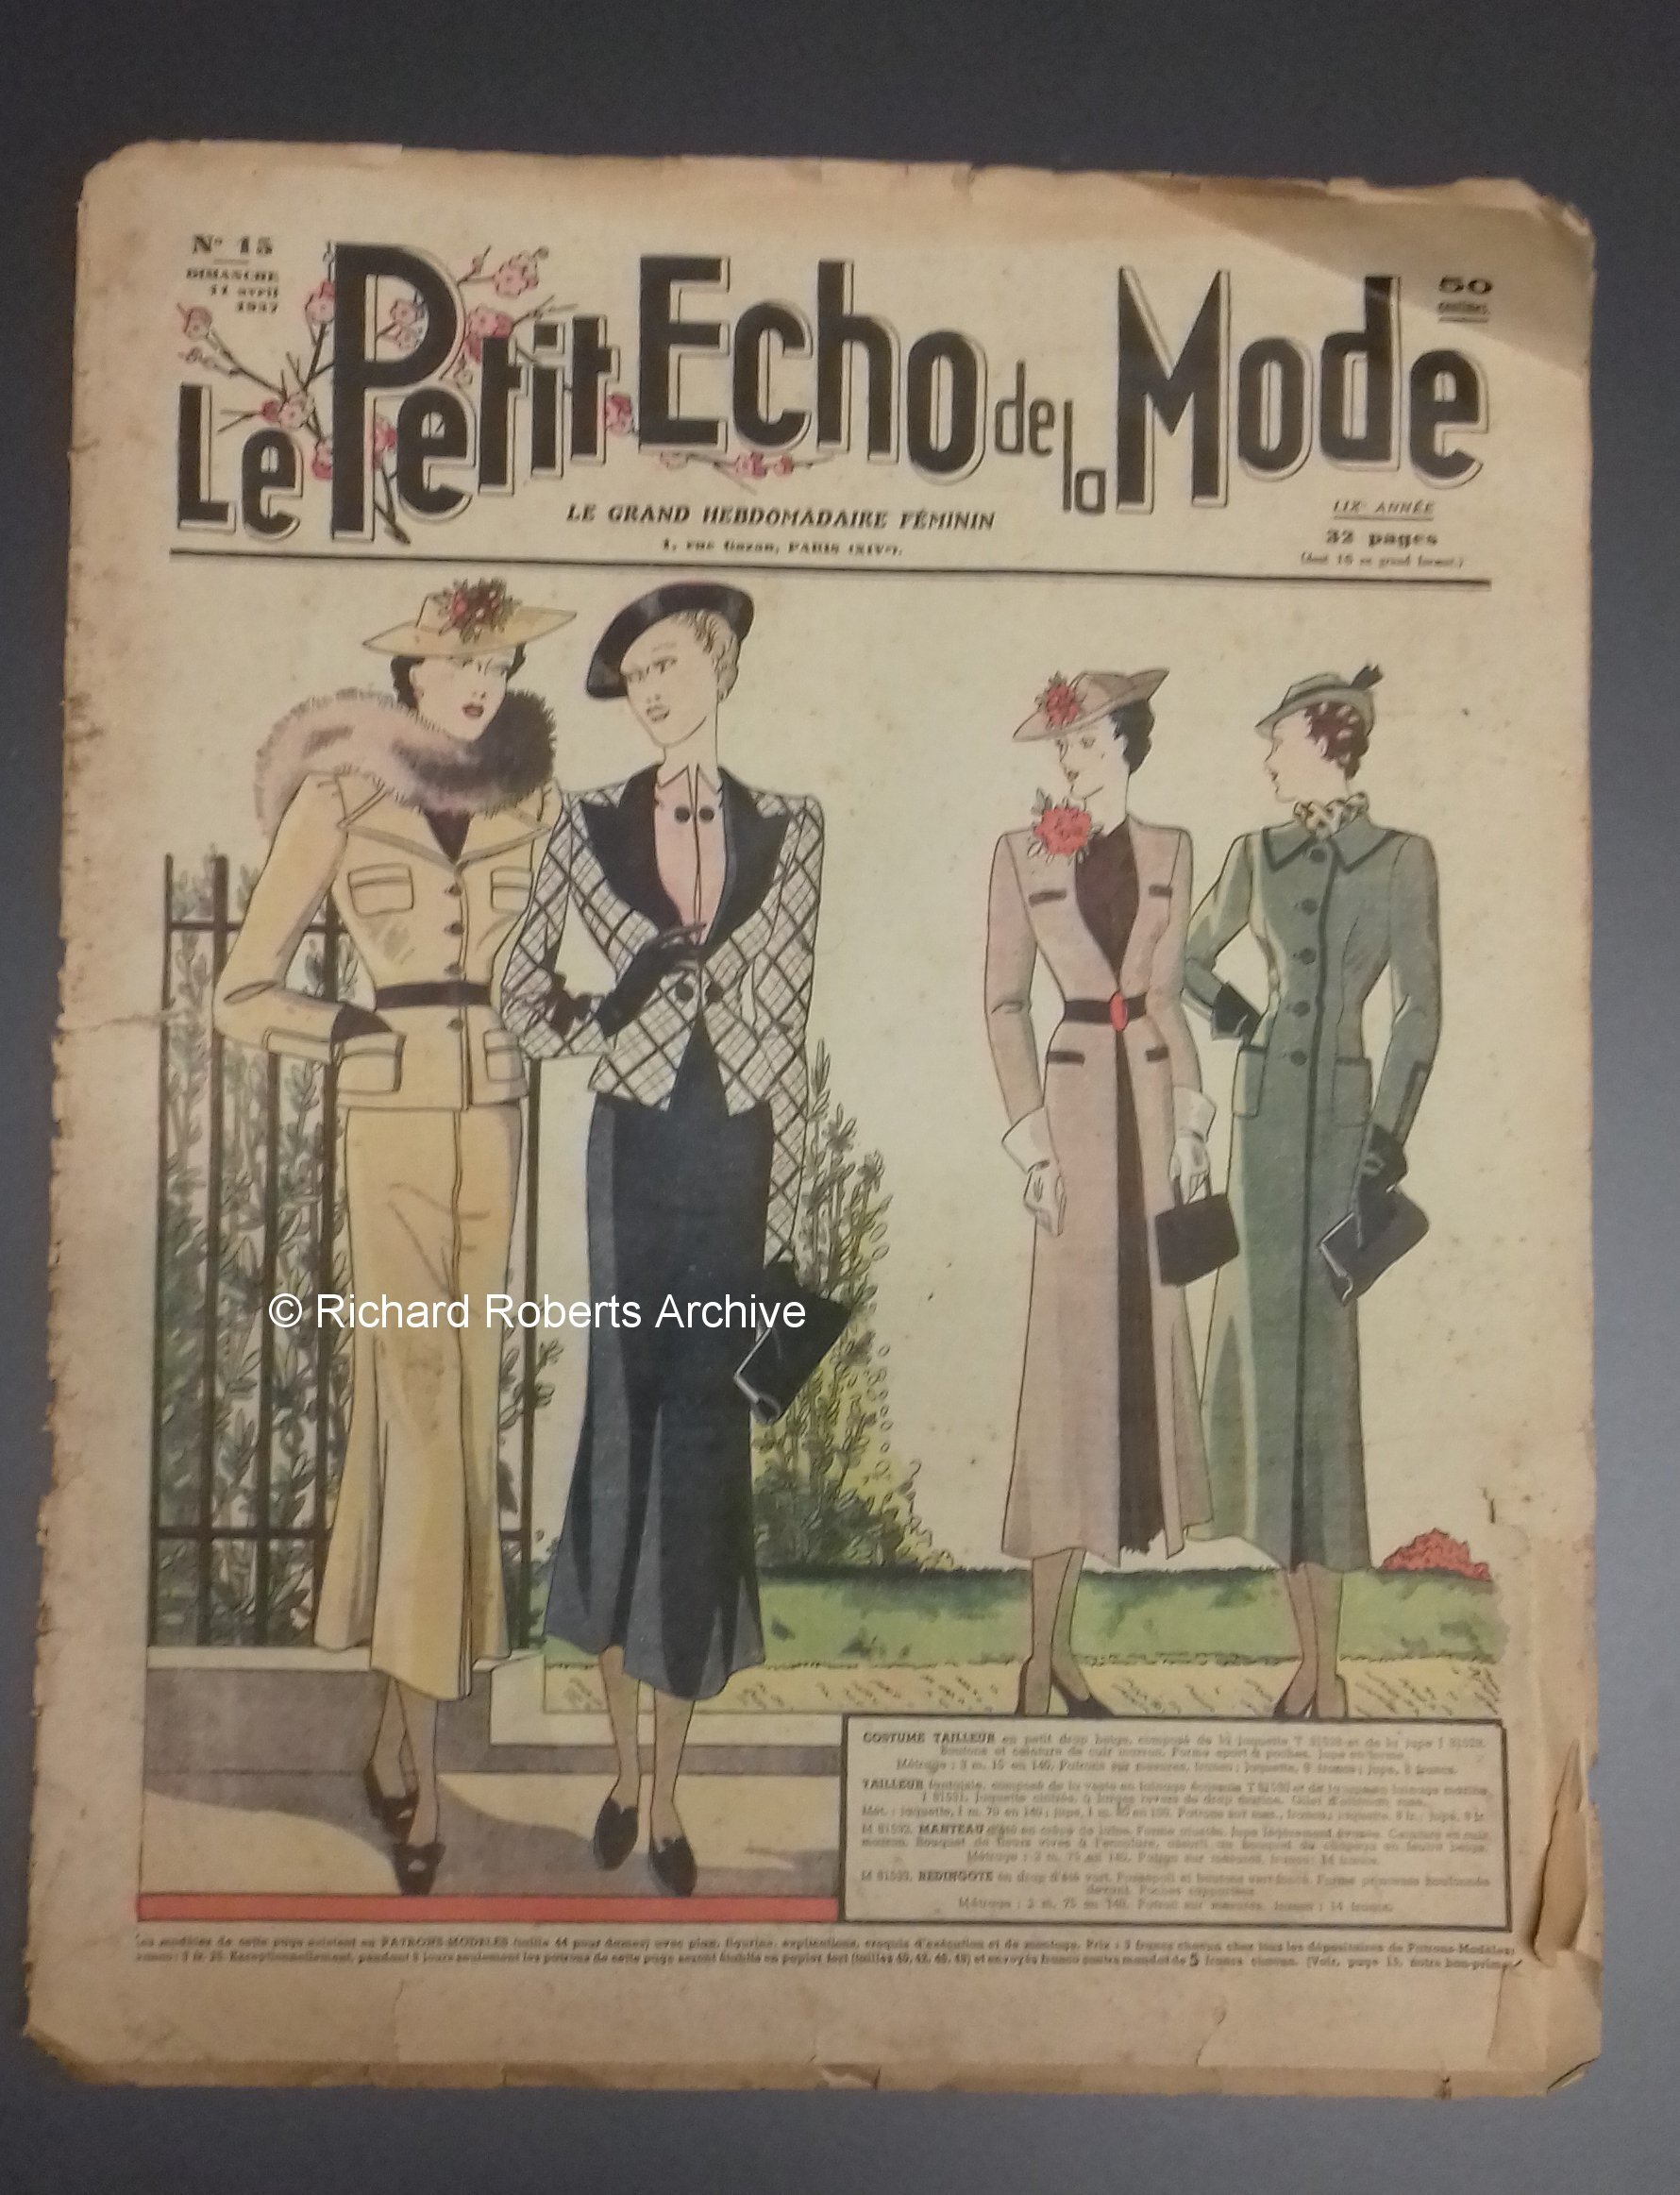 Buy The Little Echo of Fashion June 3, 1917, Women's Magazine